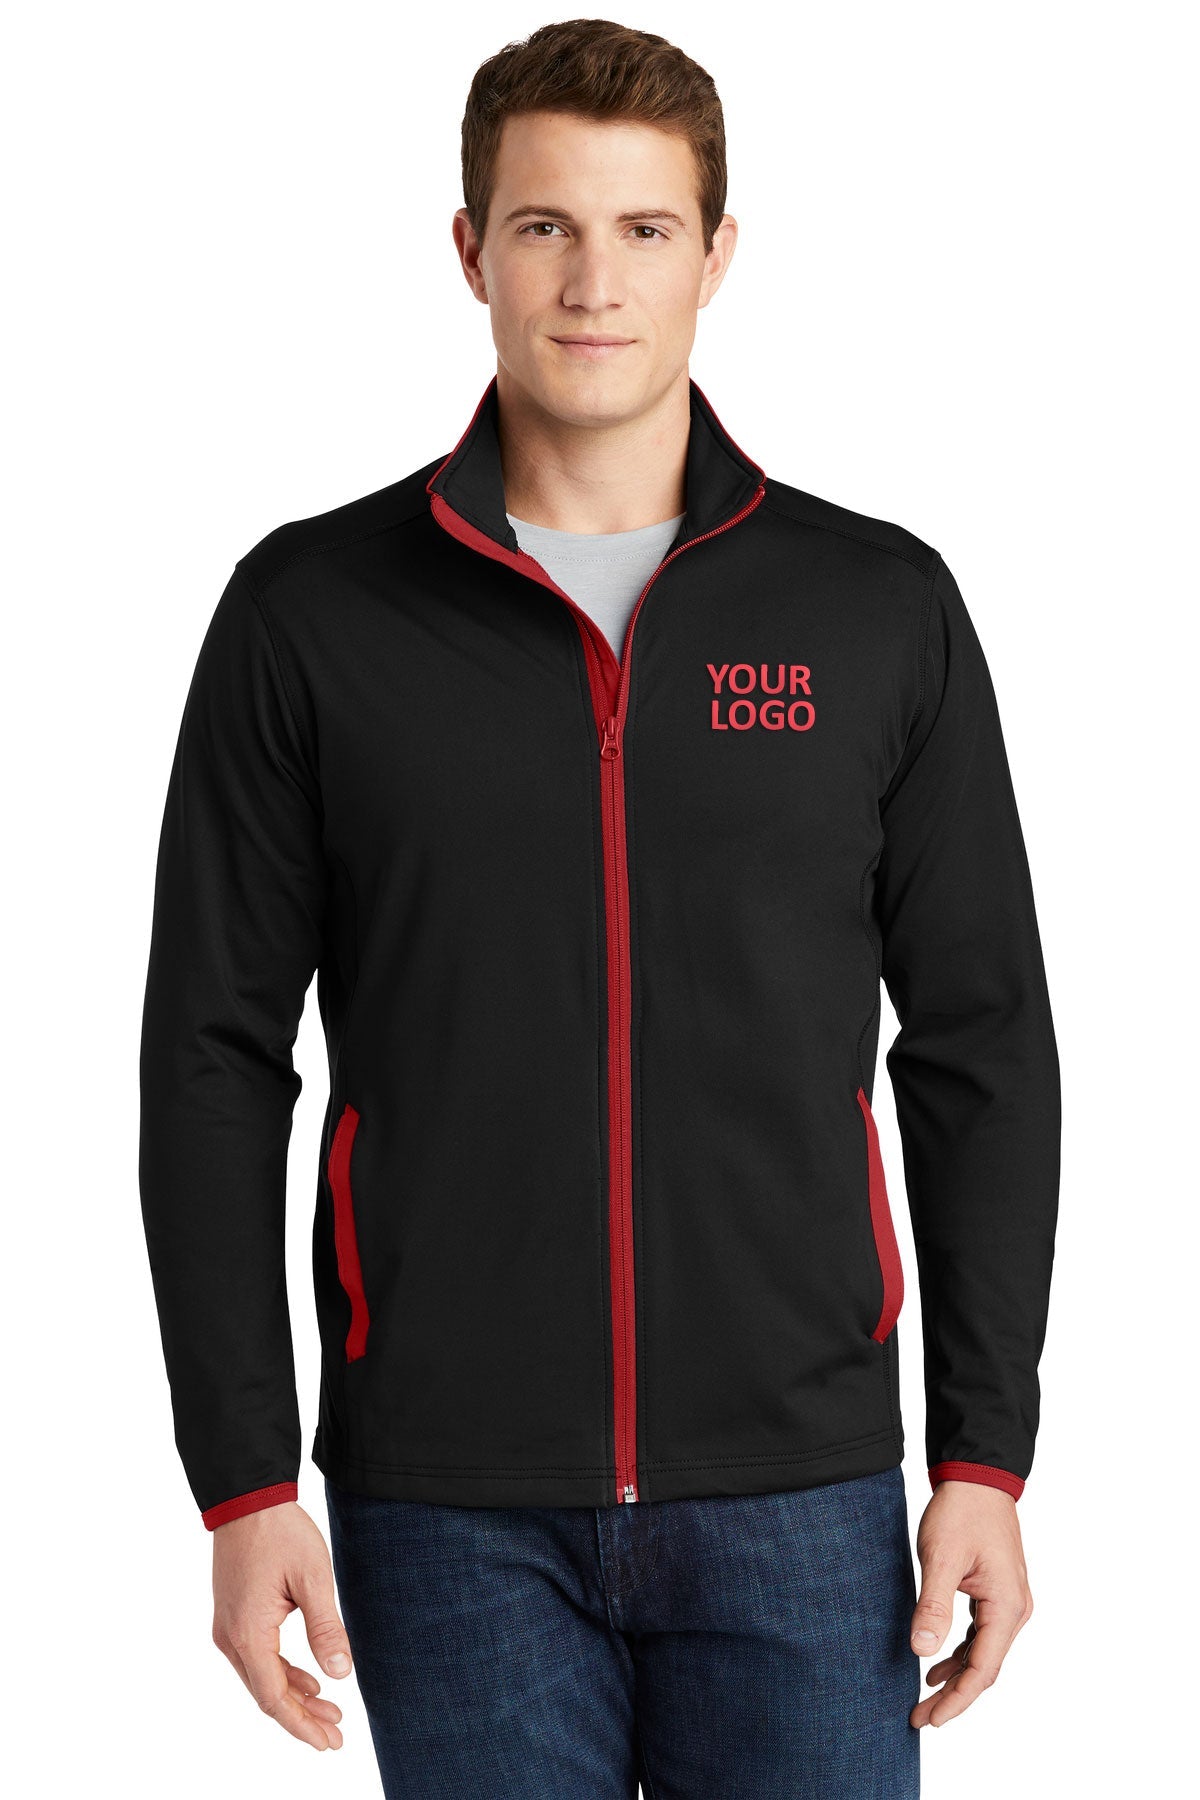 Sport-Tek Black/ True Red ST853 sweatshirts with company logo